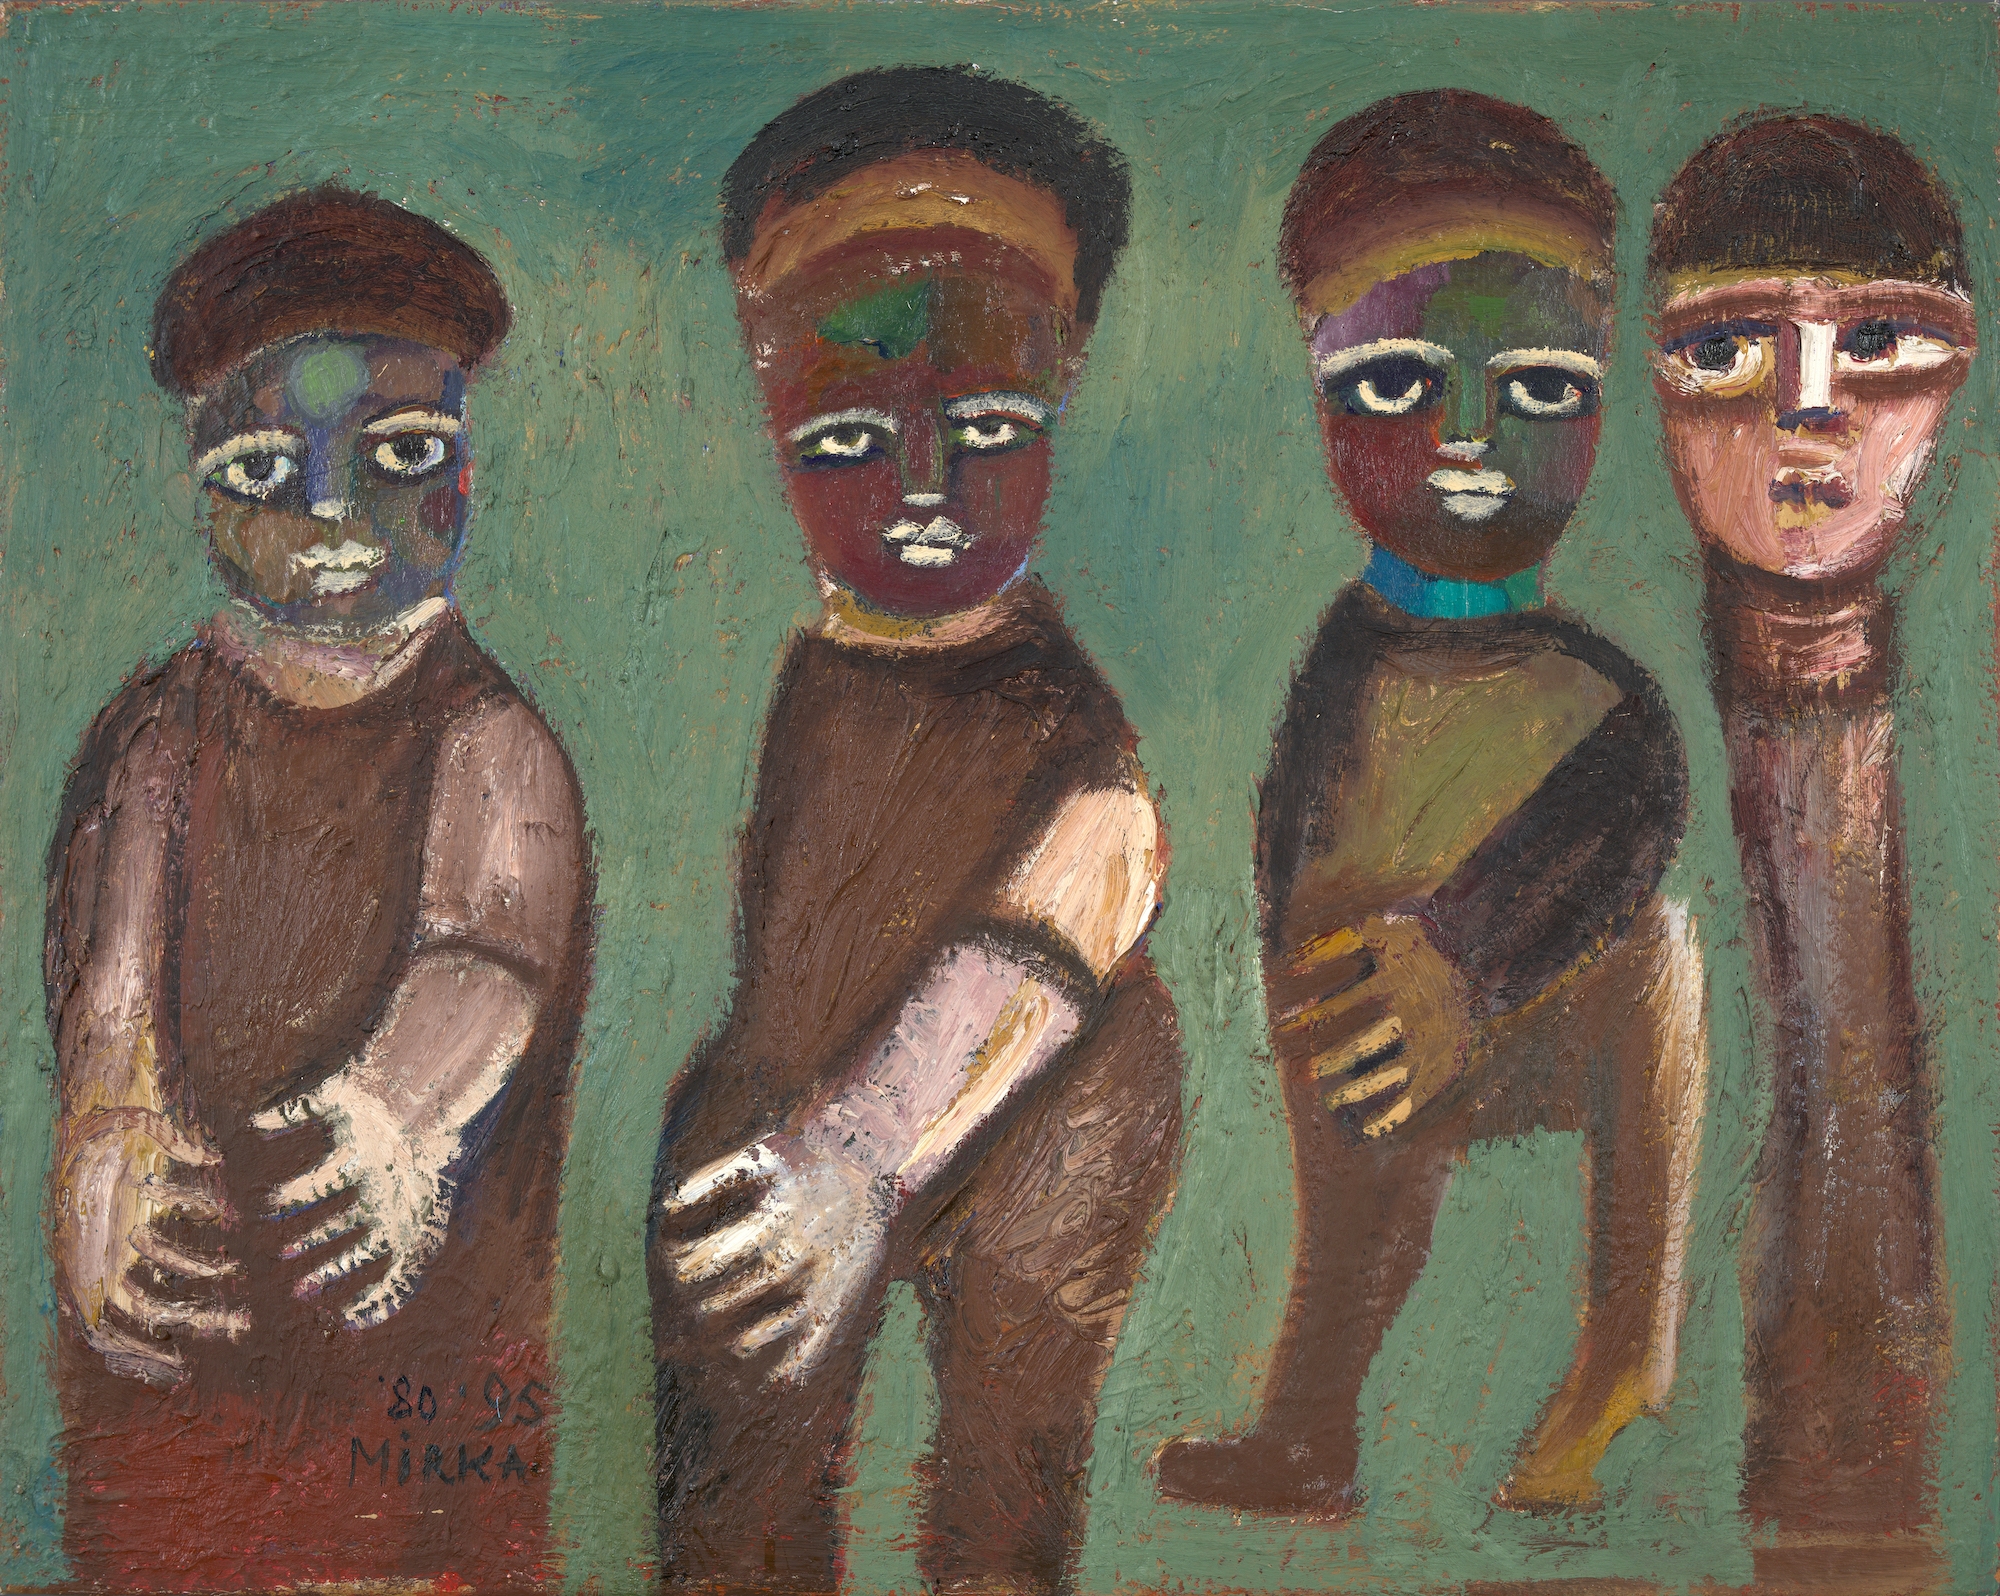 Four Figures by Mirka Mora, 1980